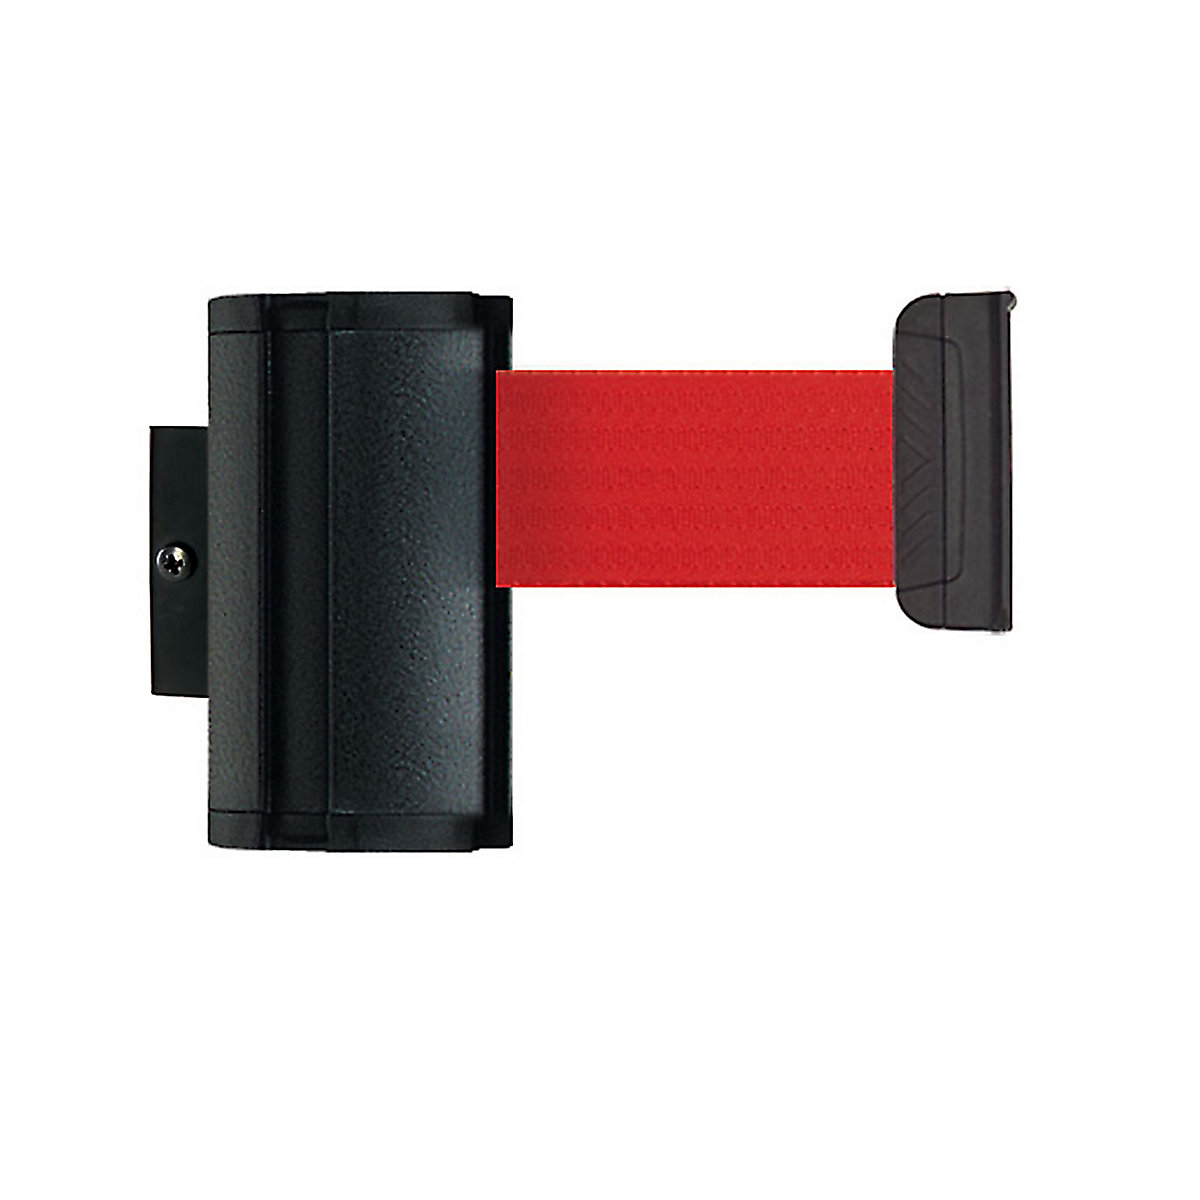 Wall Mount tape belt cartridge, belt extends to max. 2300 mm, belt colour red-3